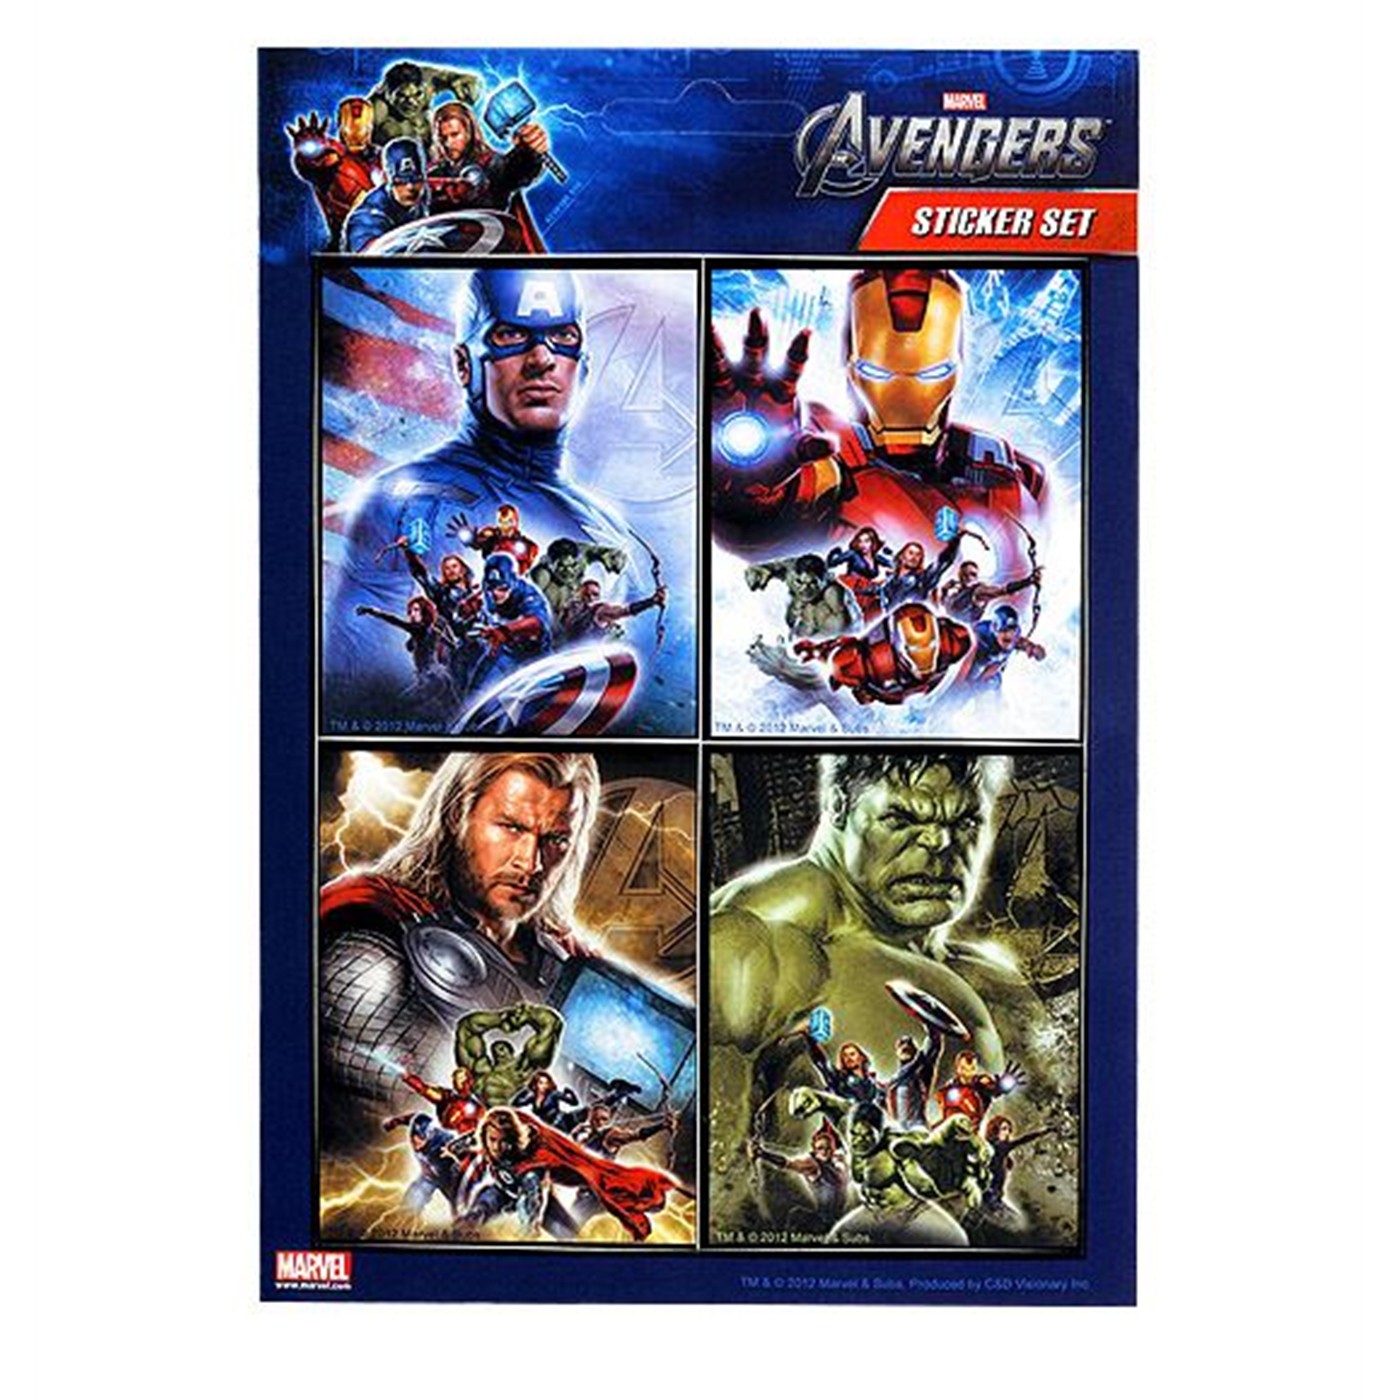 Avengers Movie Sticker Set